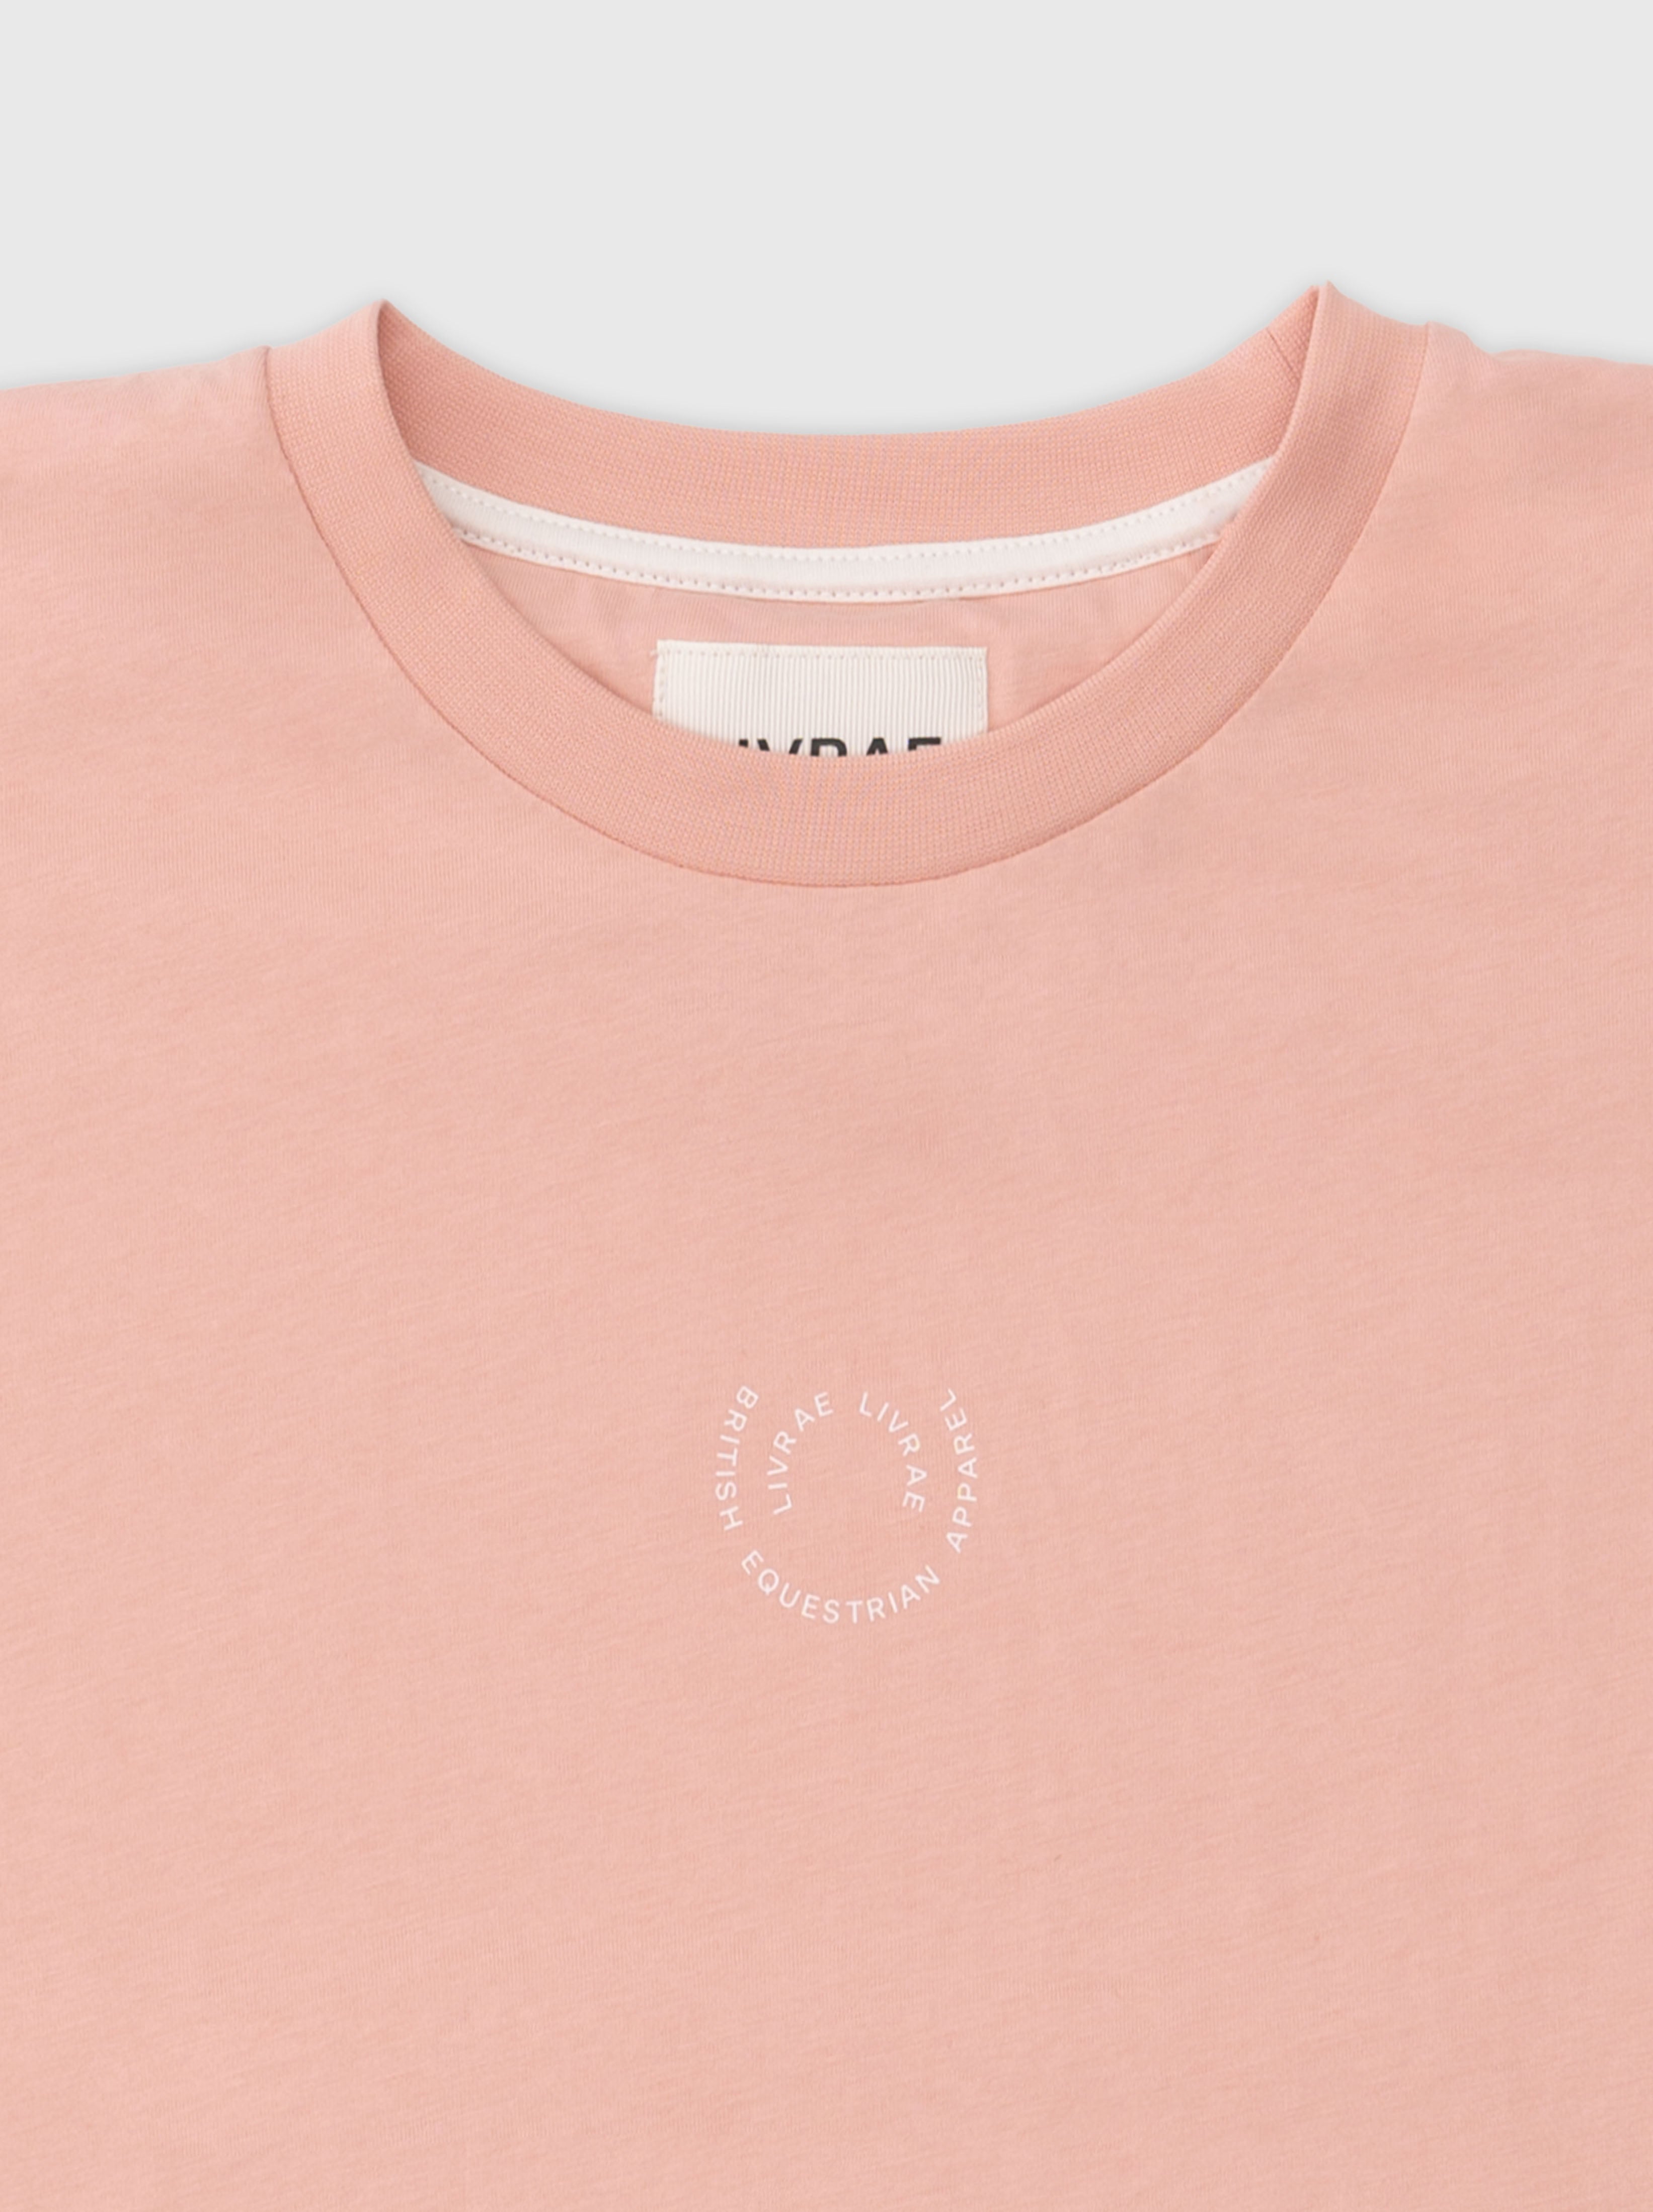 Everyday T-Shirt - Smoke Pink